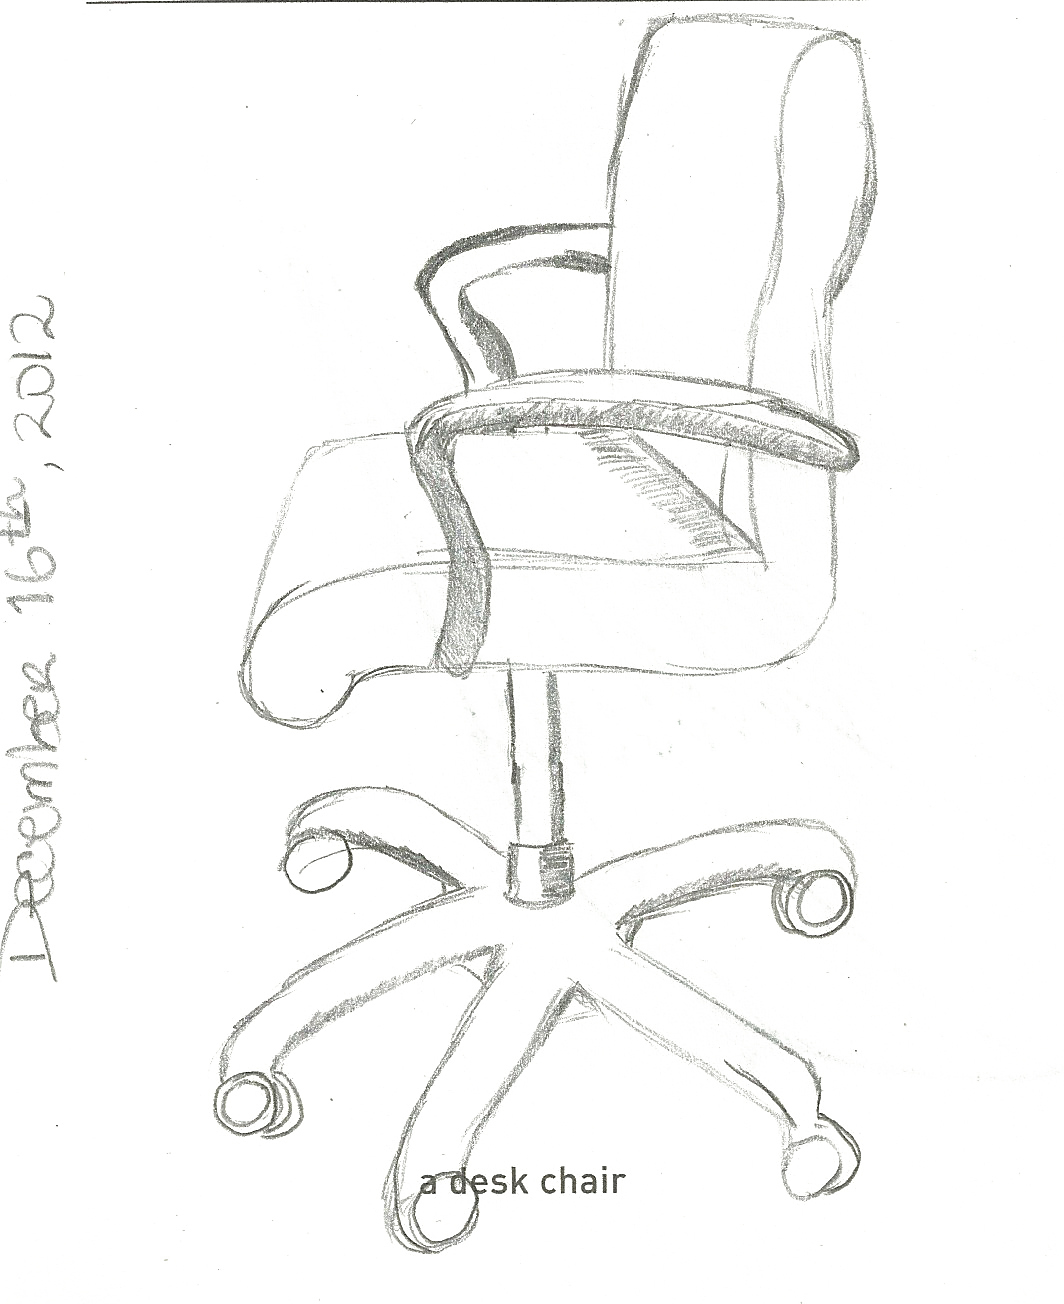 005 A Desk Chair Doodle Company